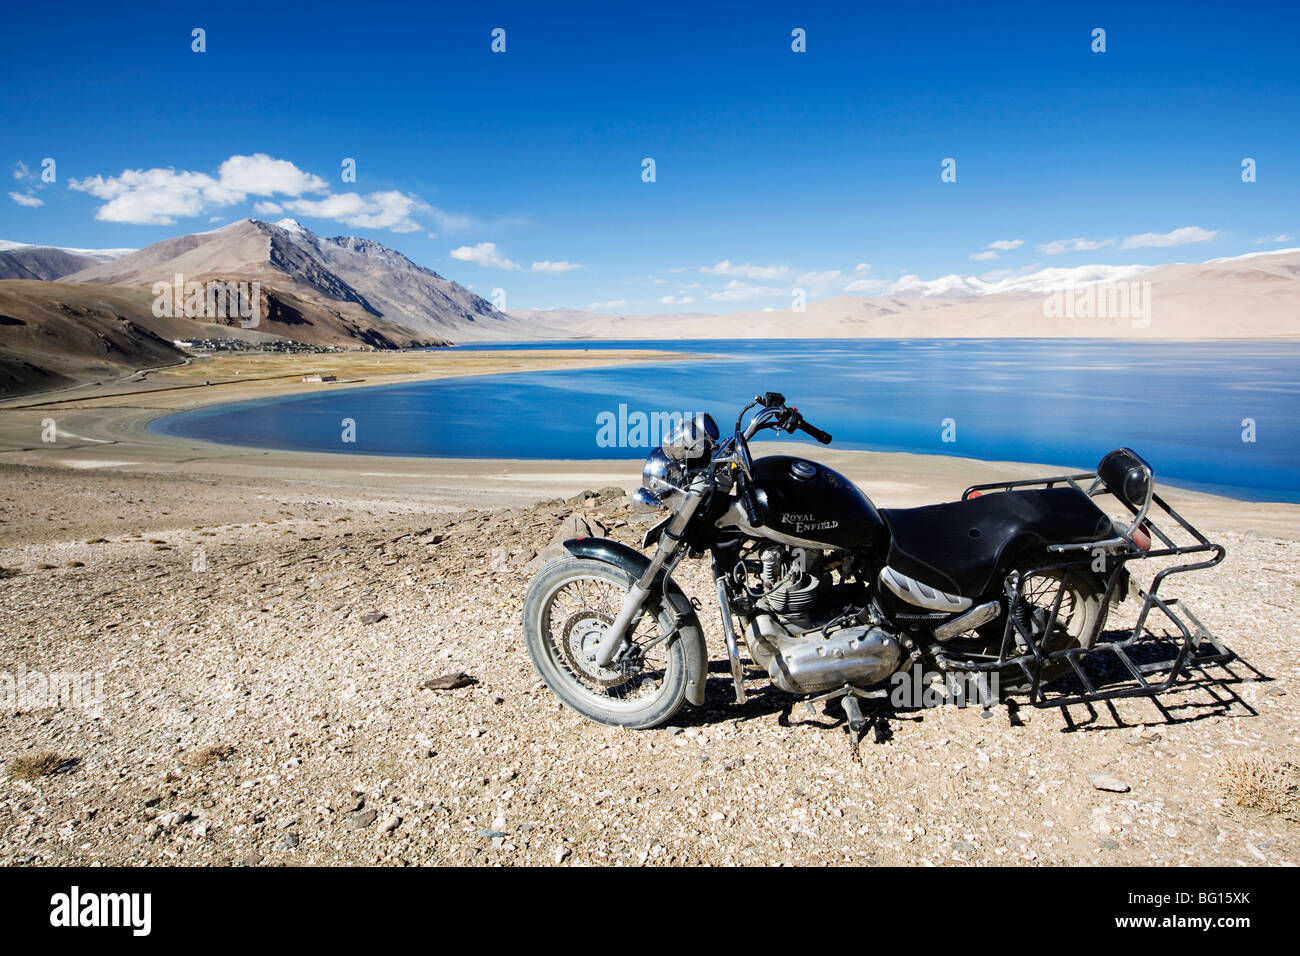 Moto Royal Enfield près du lac Tsomoriri en Himalaya, Ladakh, Inde. Banque D'Images